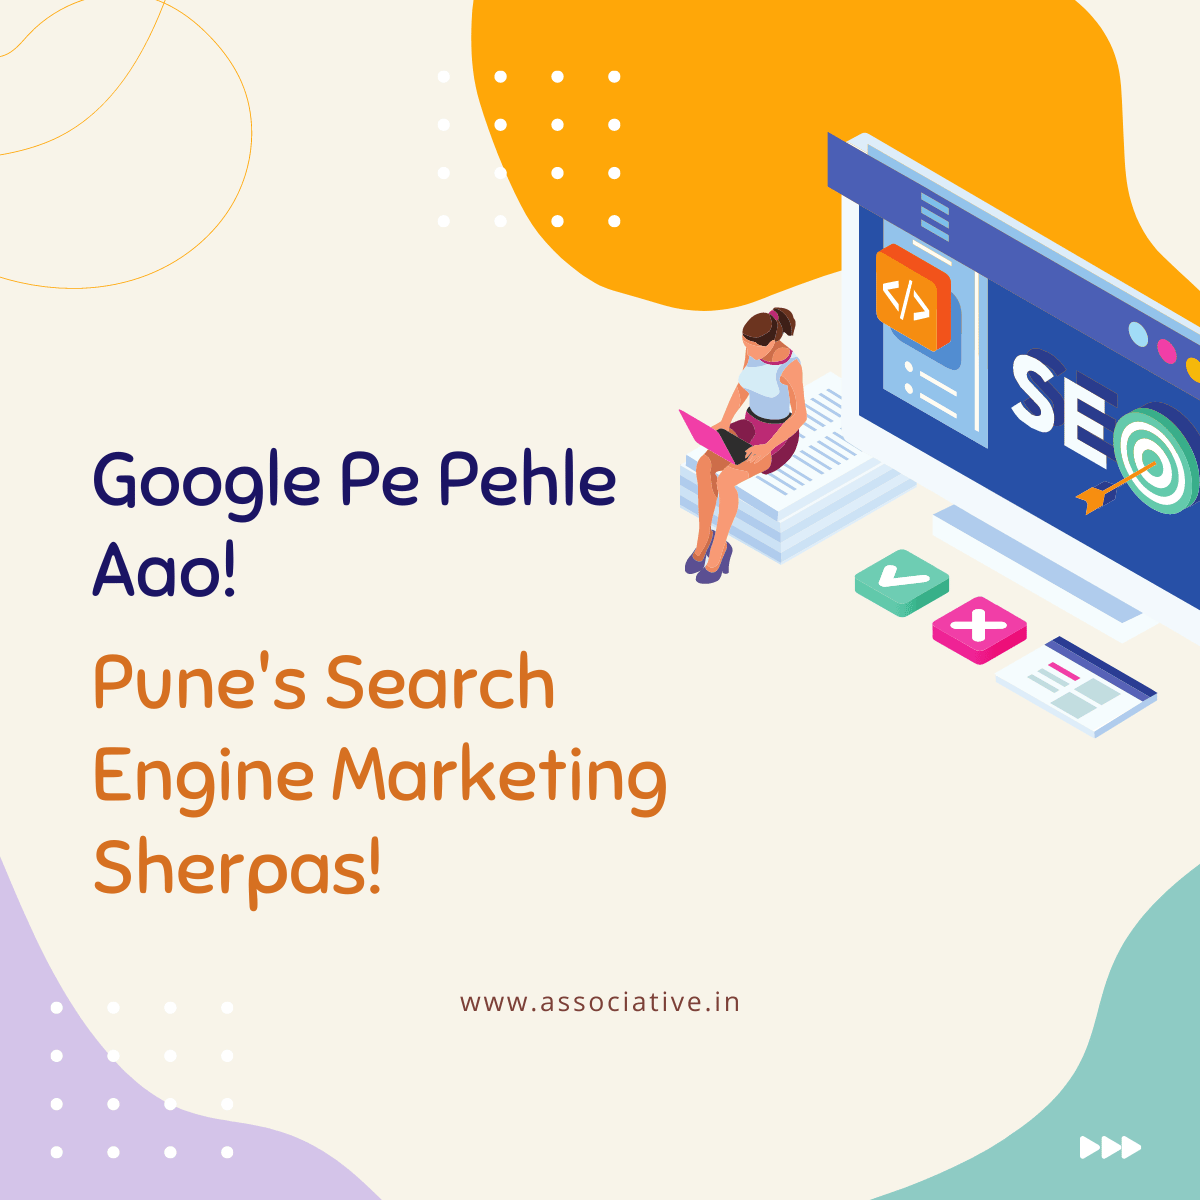 Google Pe Pehle Aao! Pune's Search Engine Marketing Sherpas!